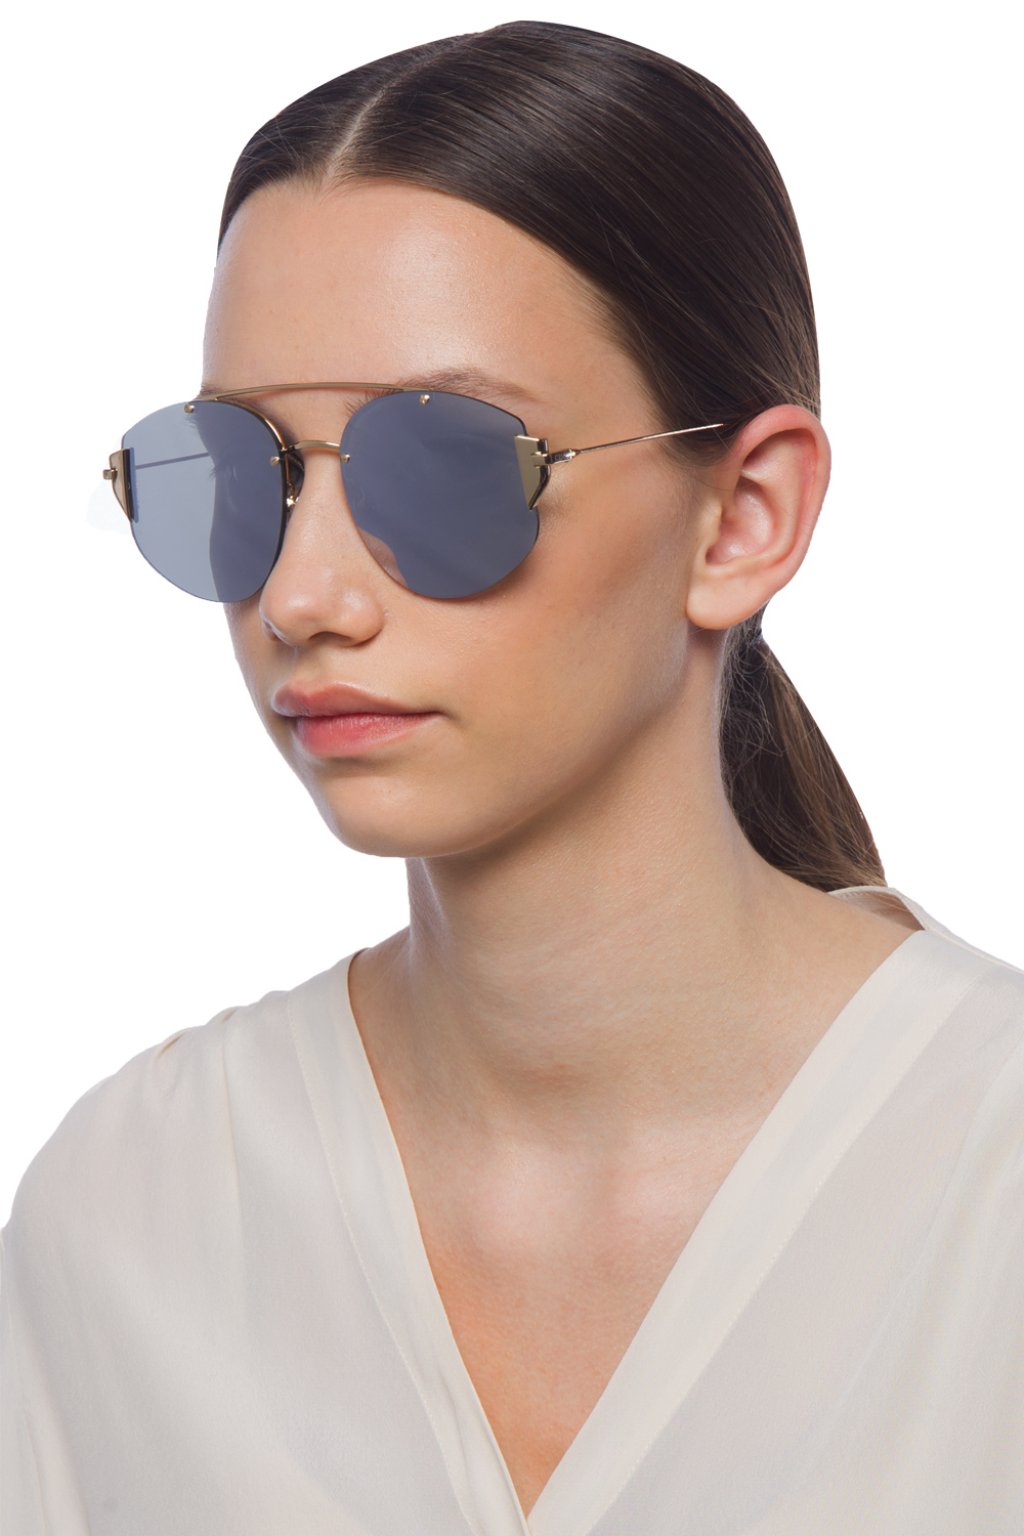 Stronger' sunglasses Dior - Vitkac TW